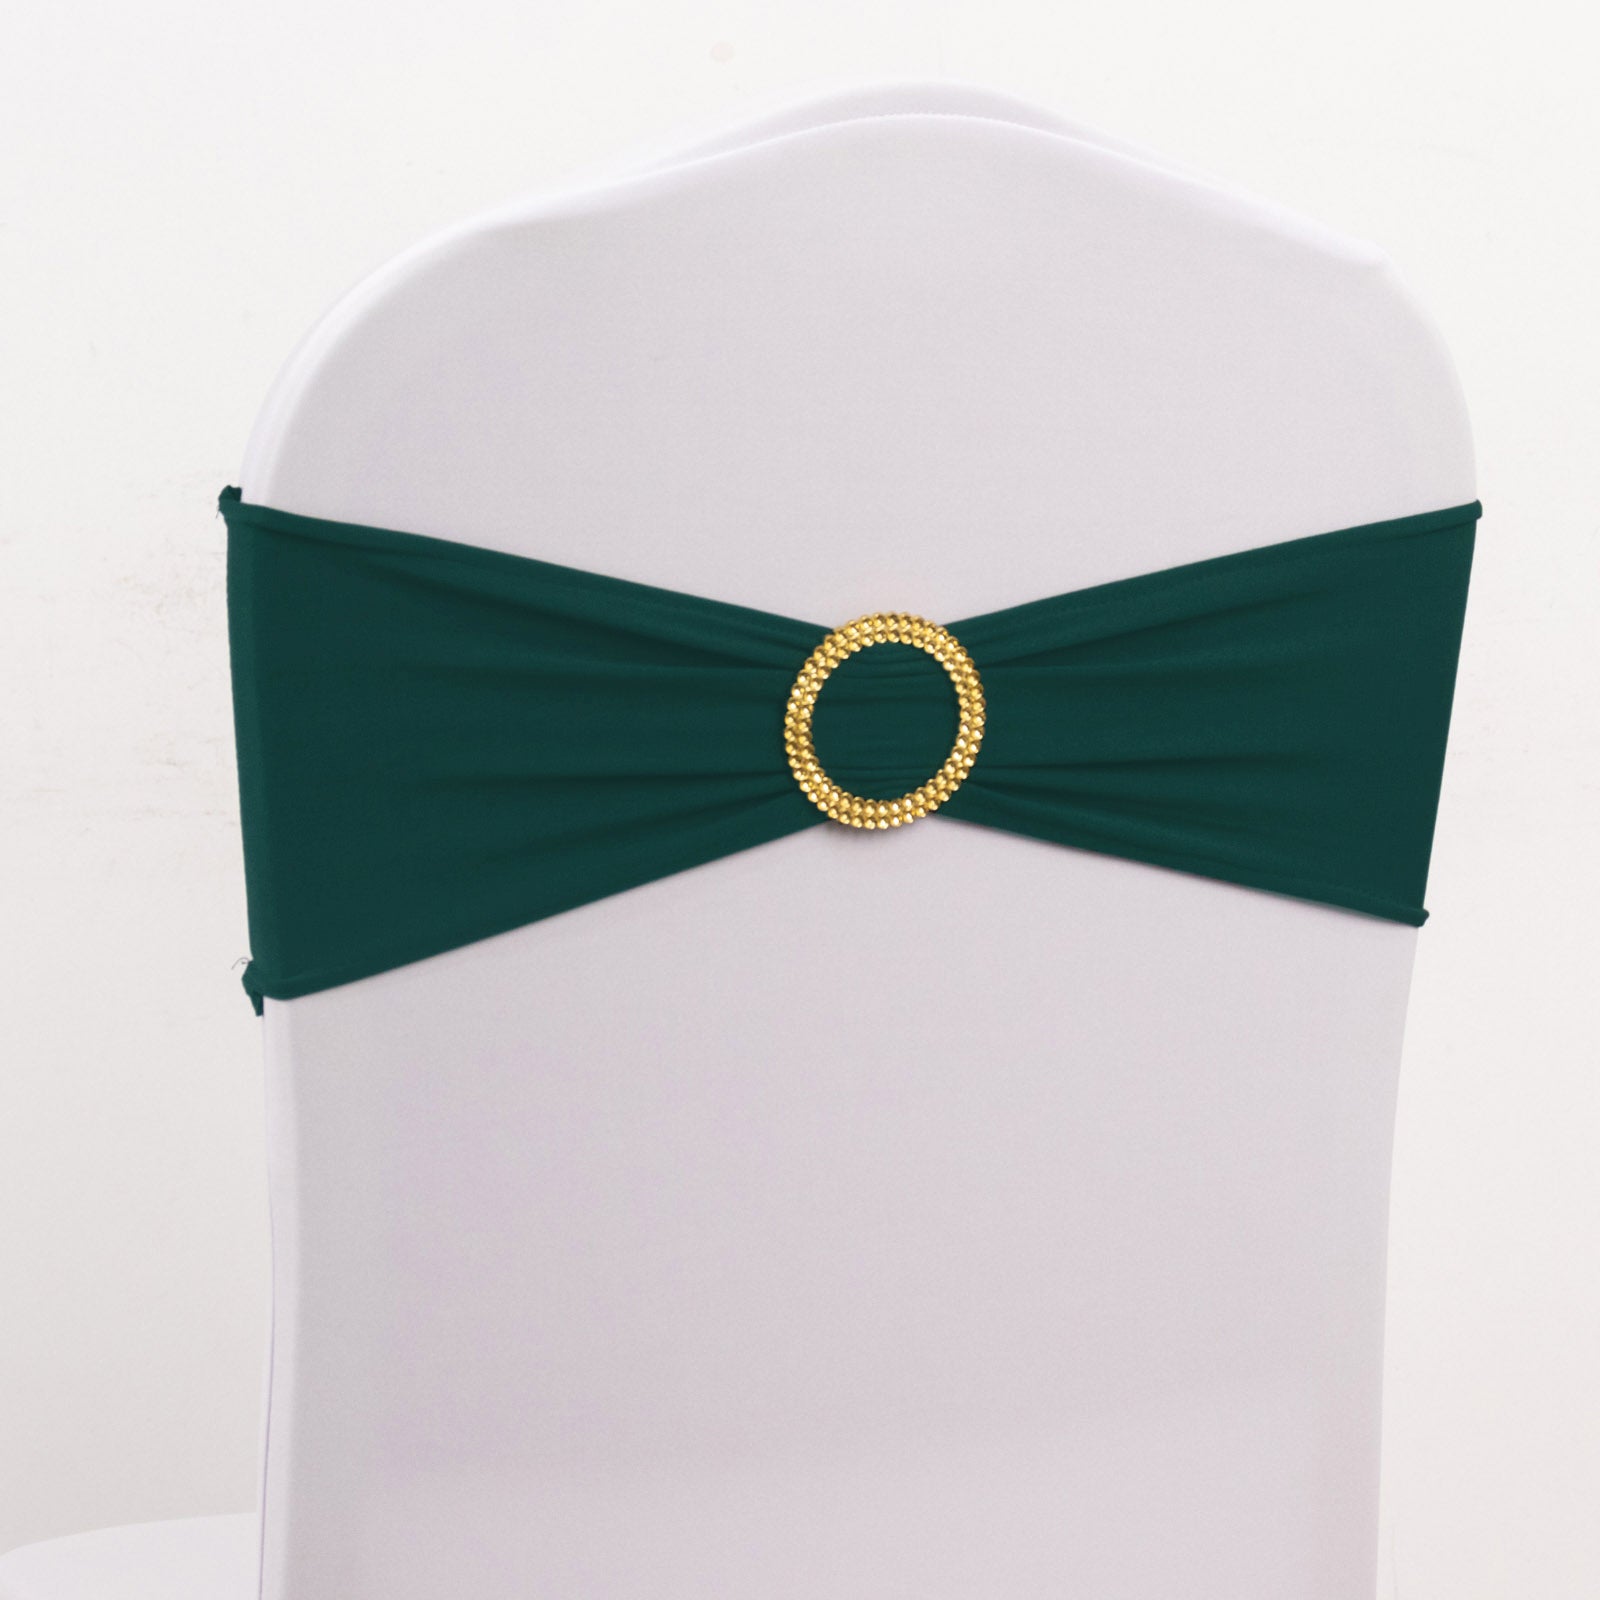 10 Eucalyptus Green Polyester CHAIR SASHES Ties Bows Wedding Party